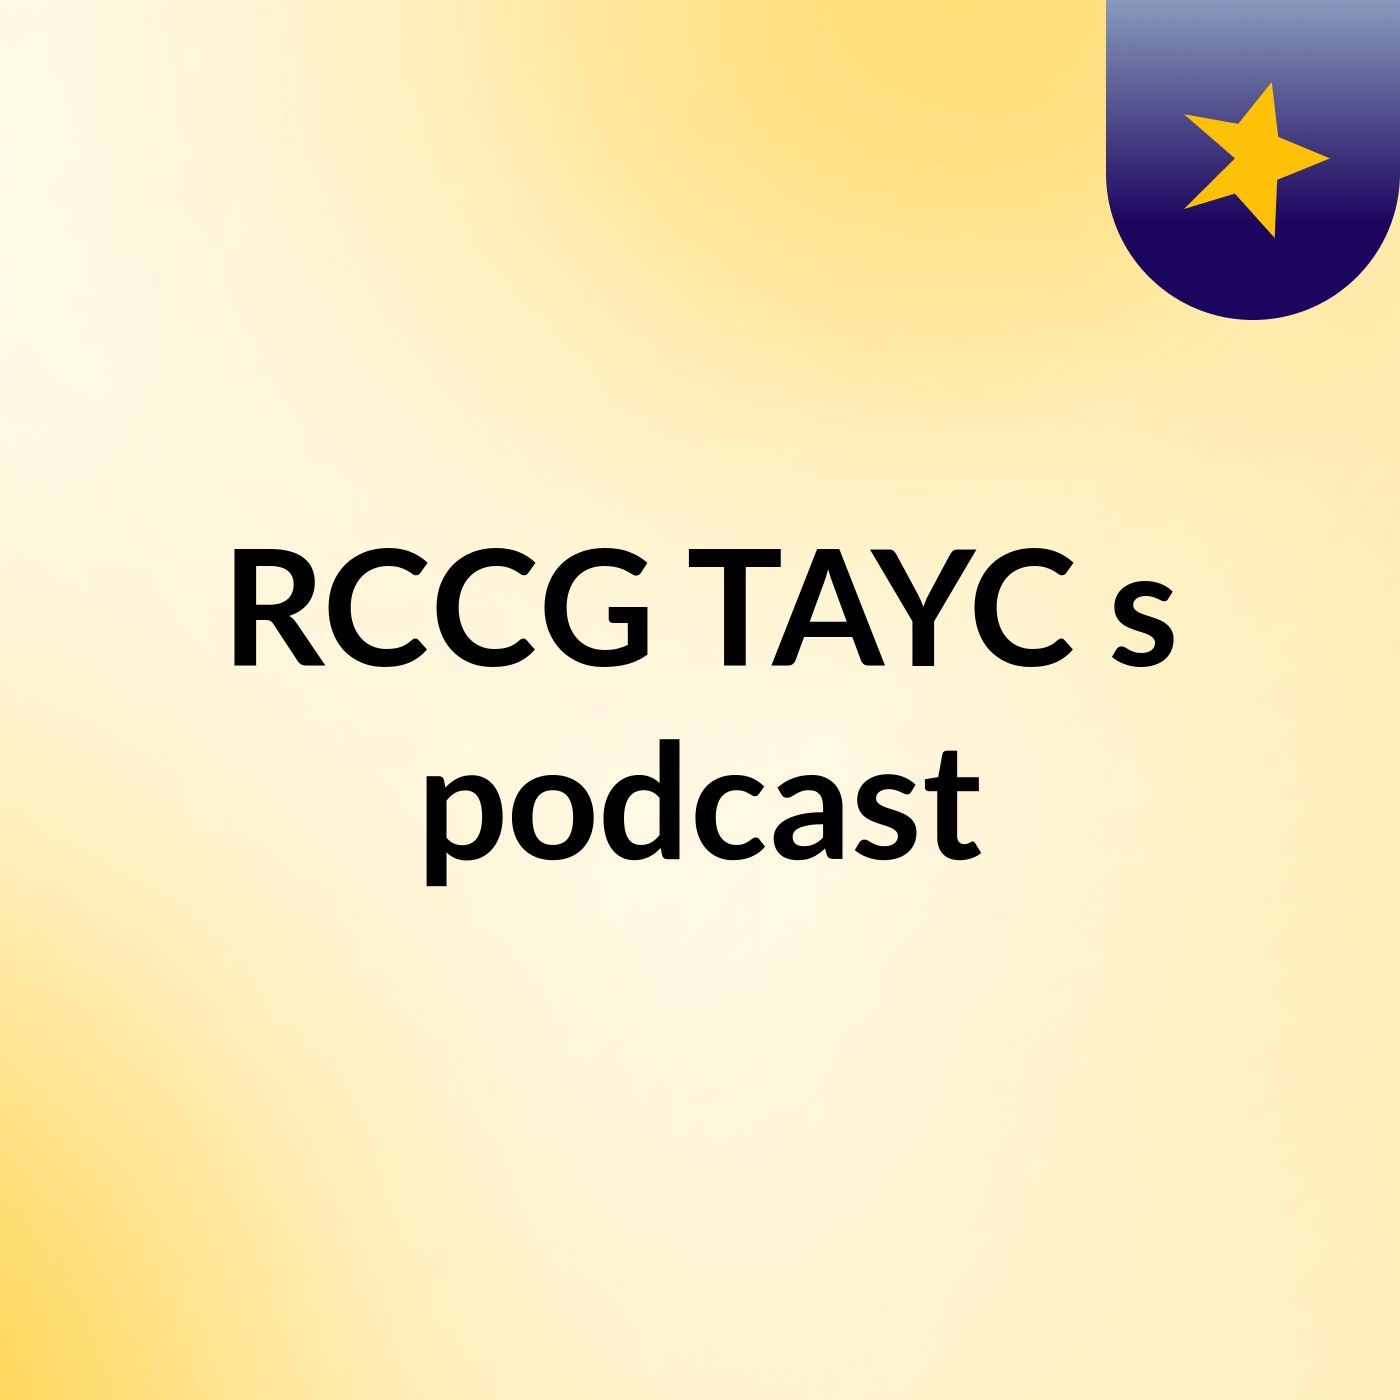 RCCG TAYC's podcast